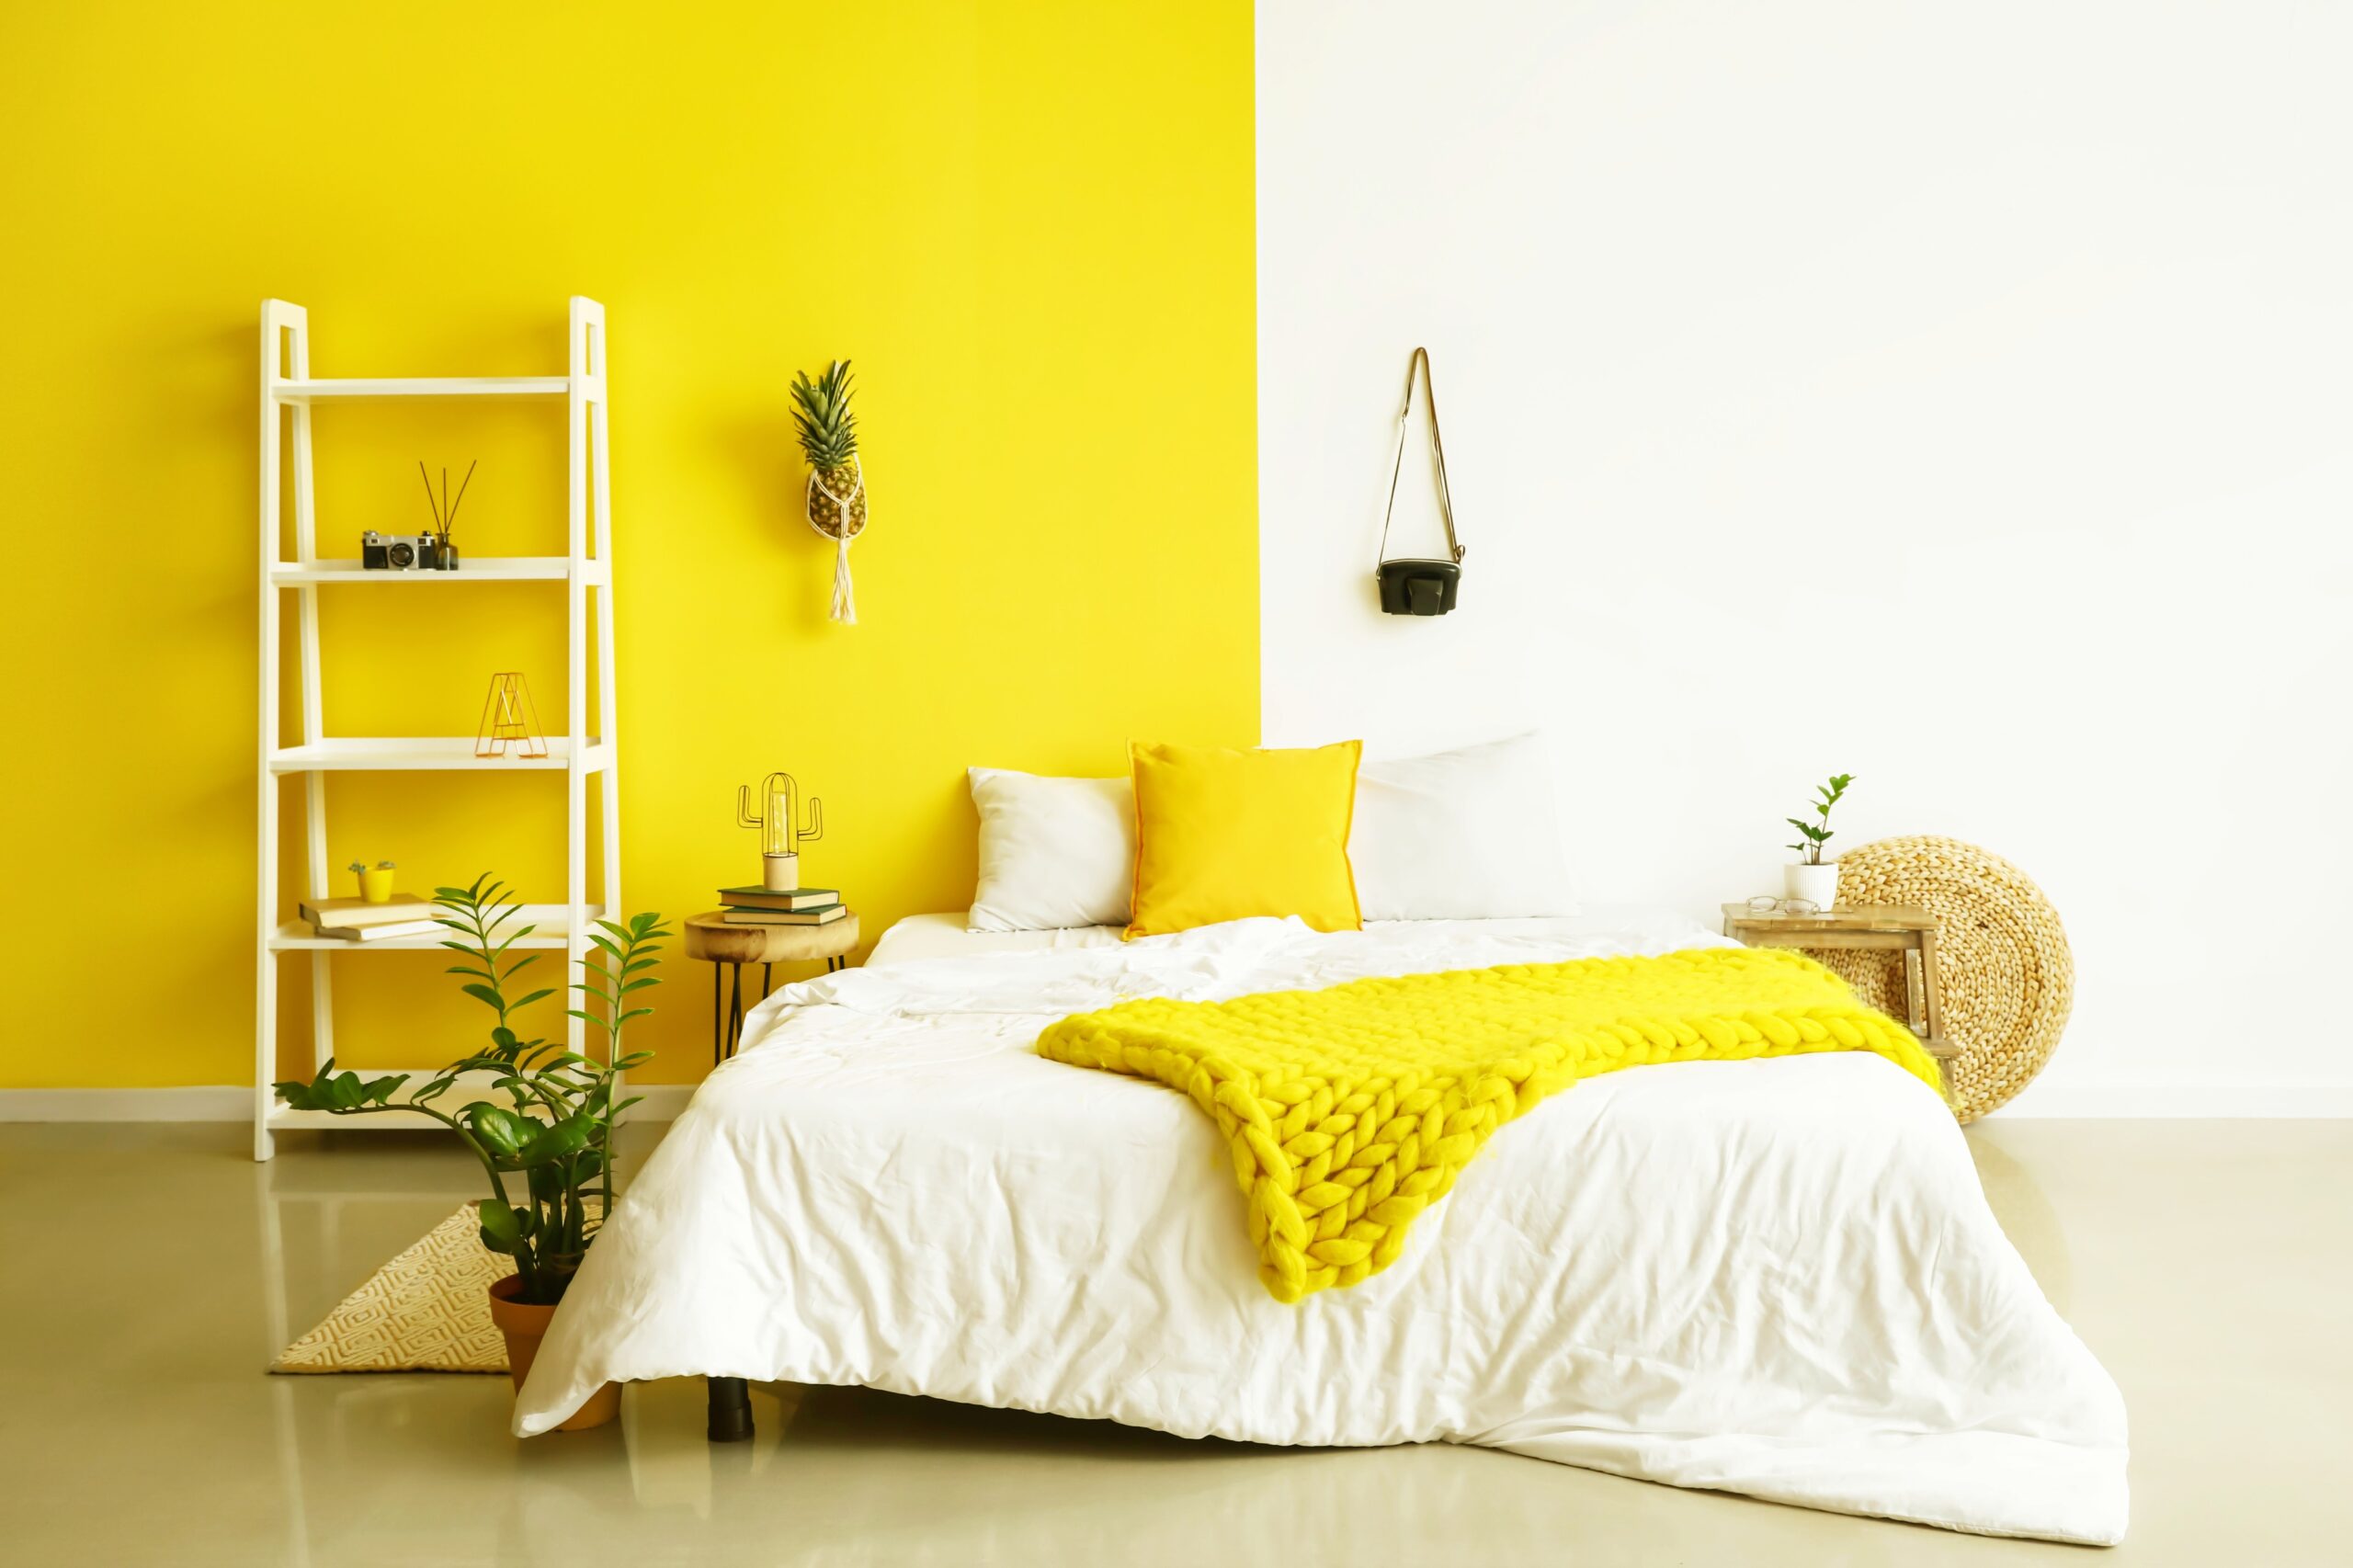 <img src="yellow.jpg" alt="yellow budget friendly bedroom decor"/>